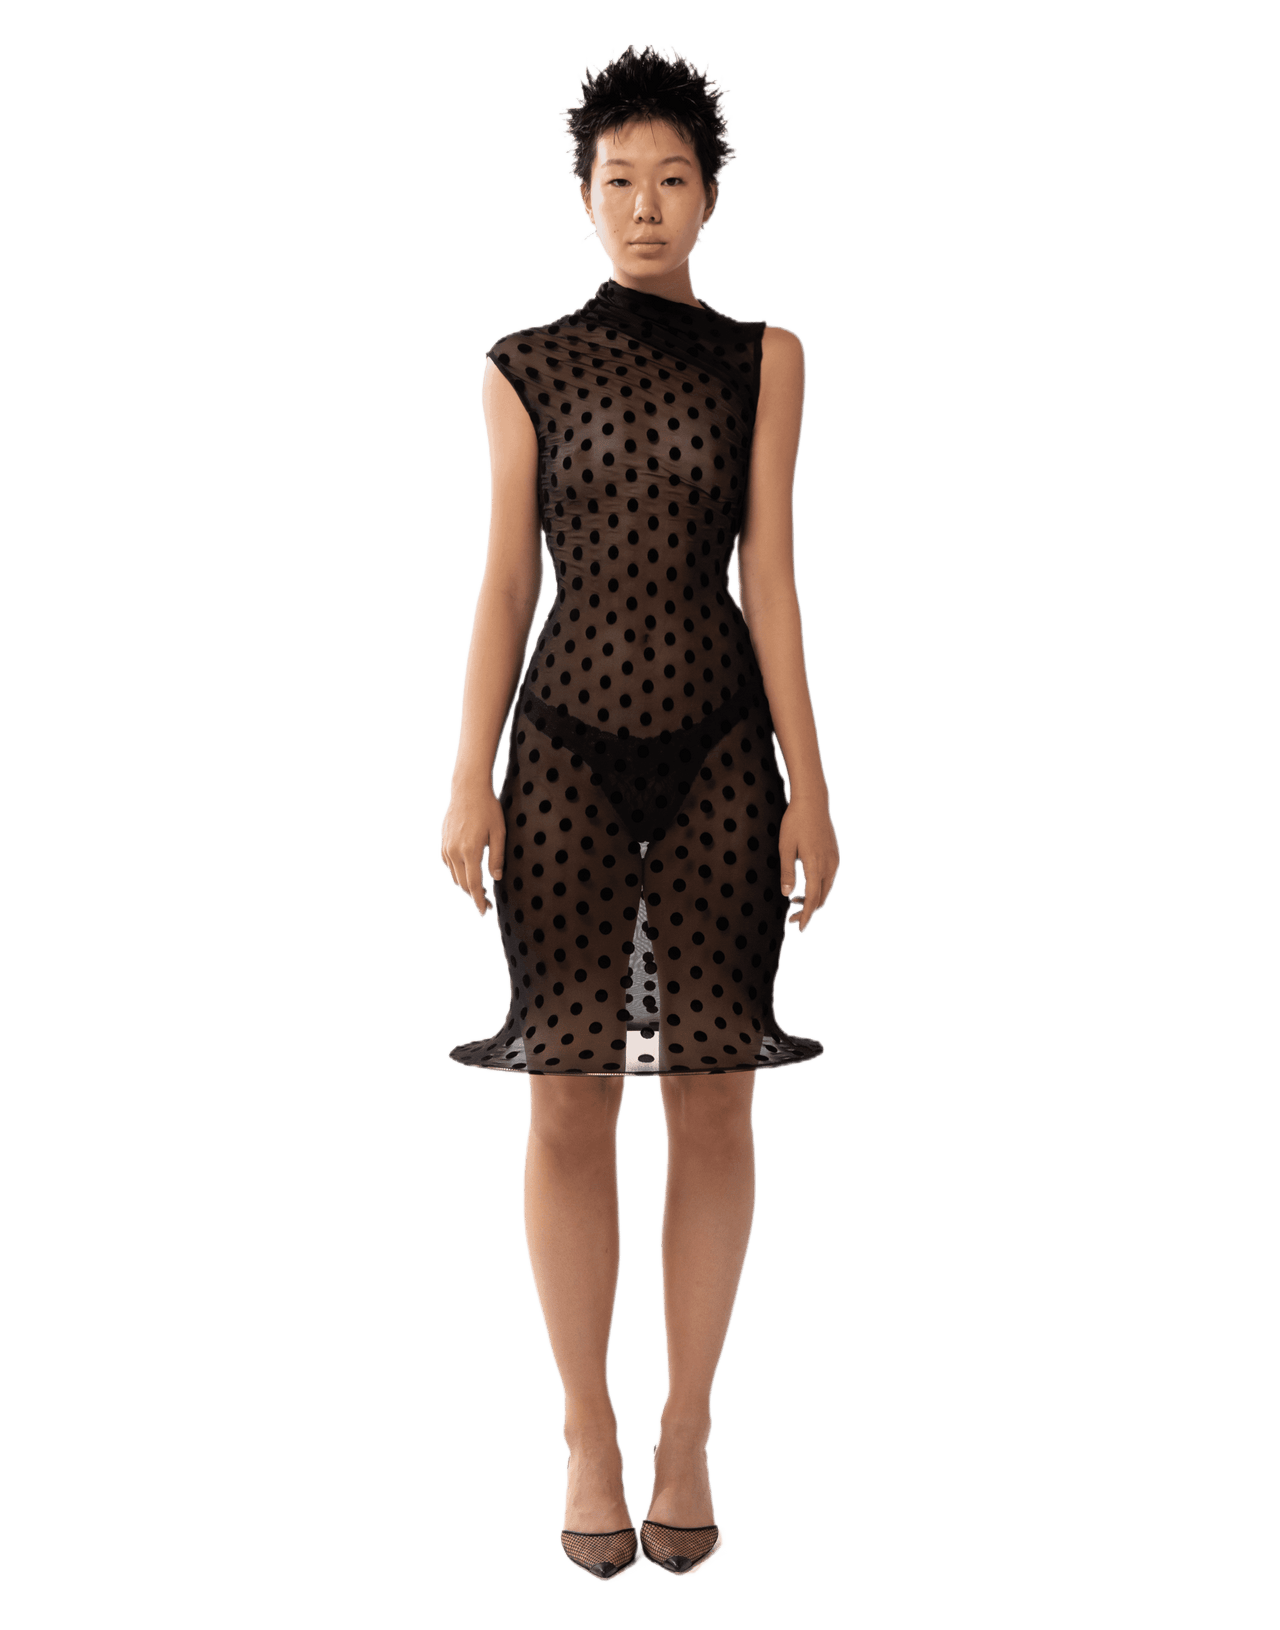 Polka Dots See-Through Hoop Dress